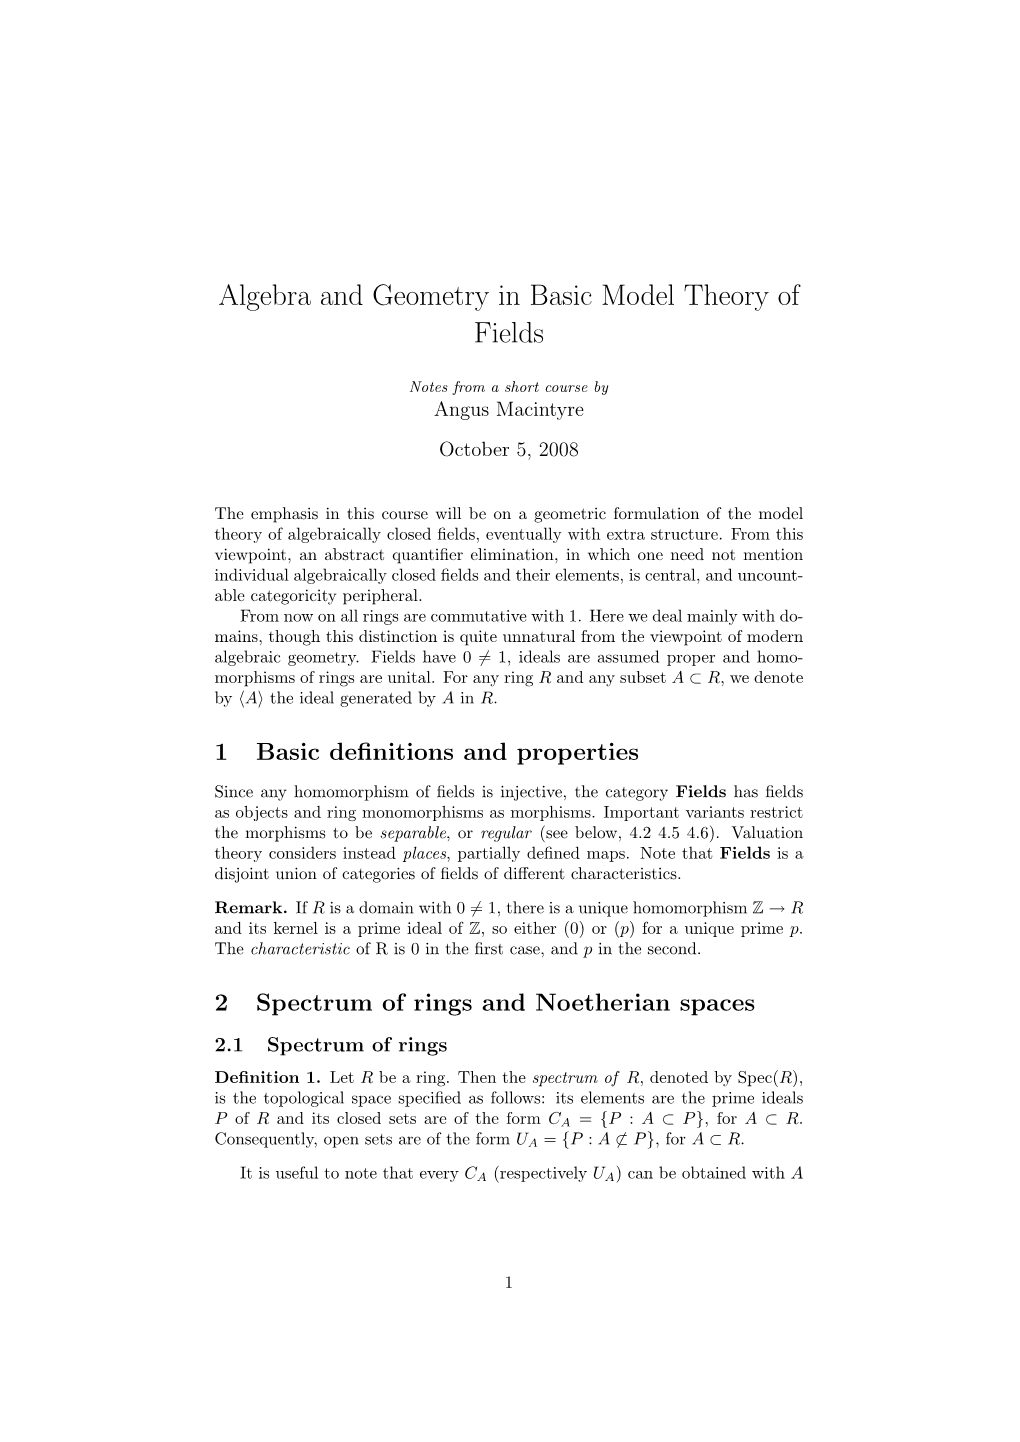 Algebra and Geometry in Basic Model Theory of Fields